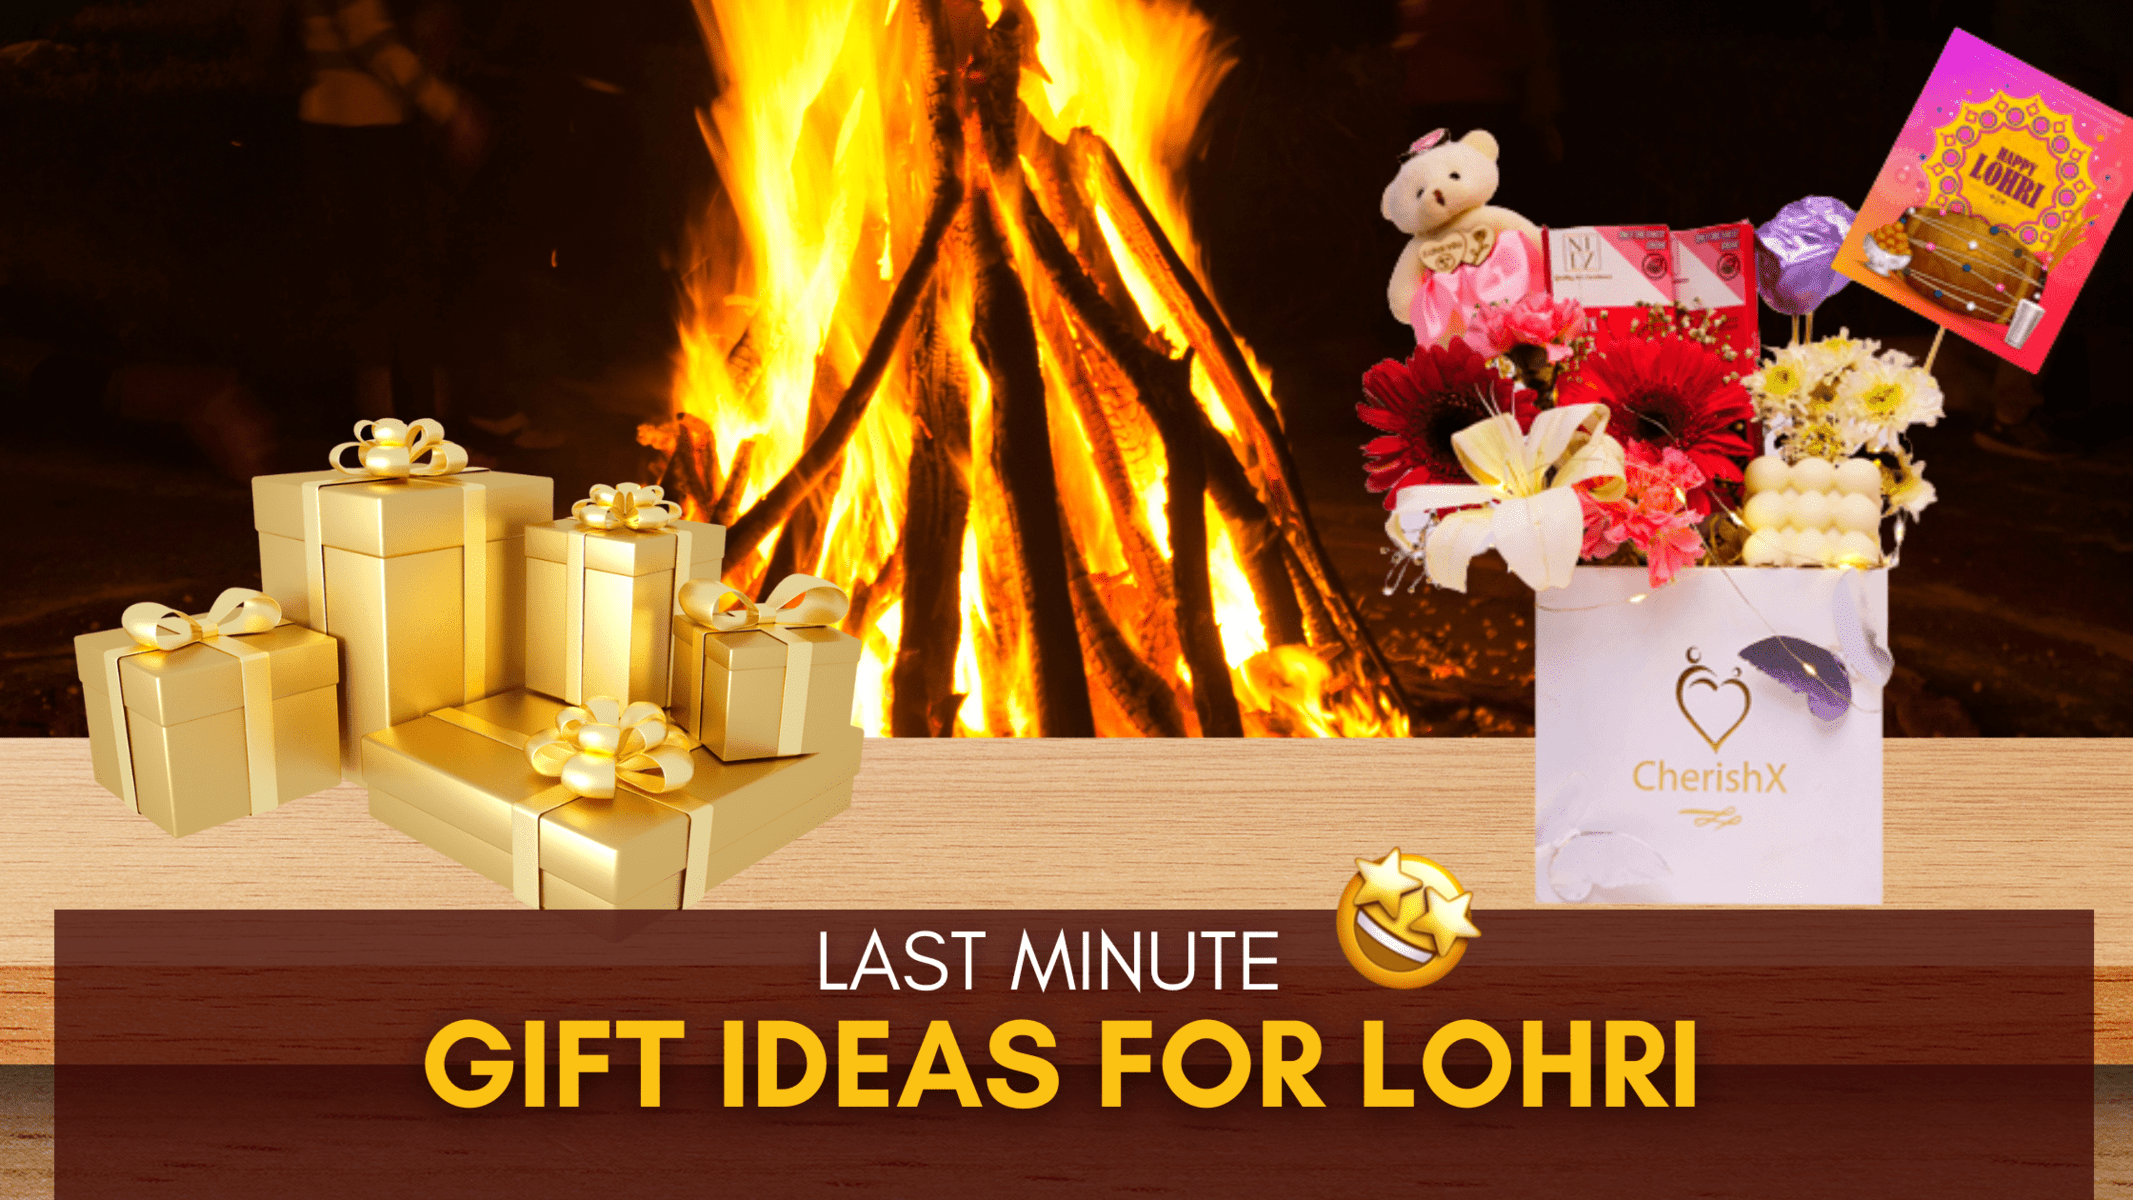 Lohri gifts